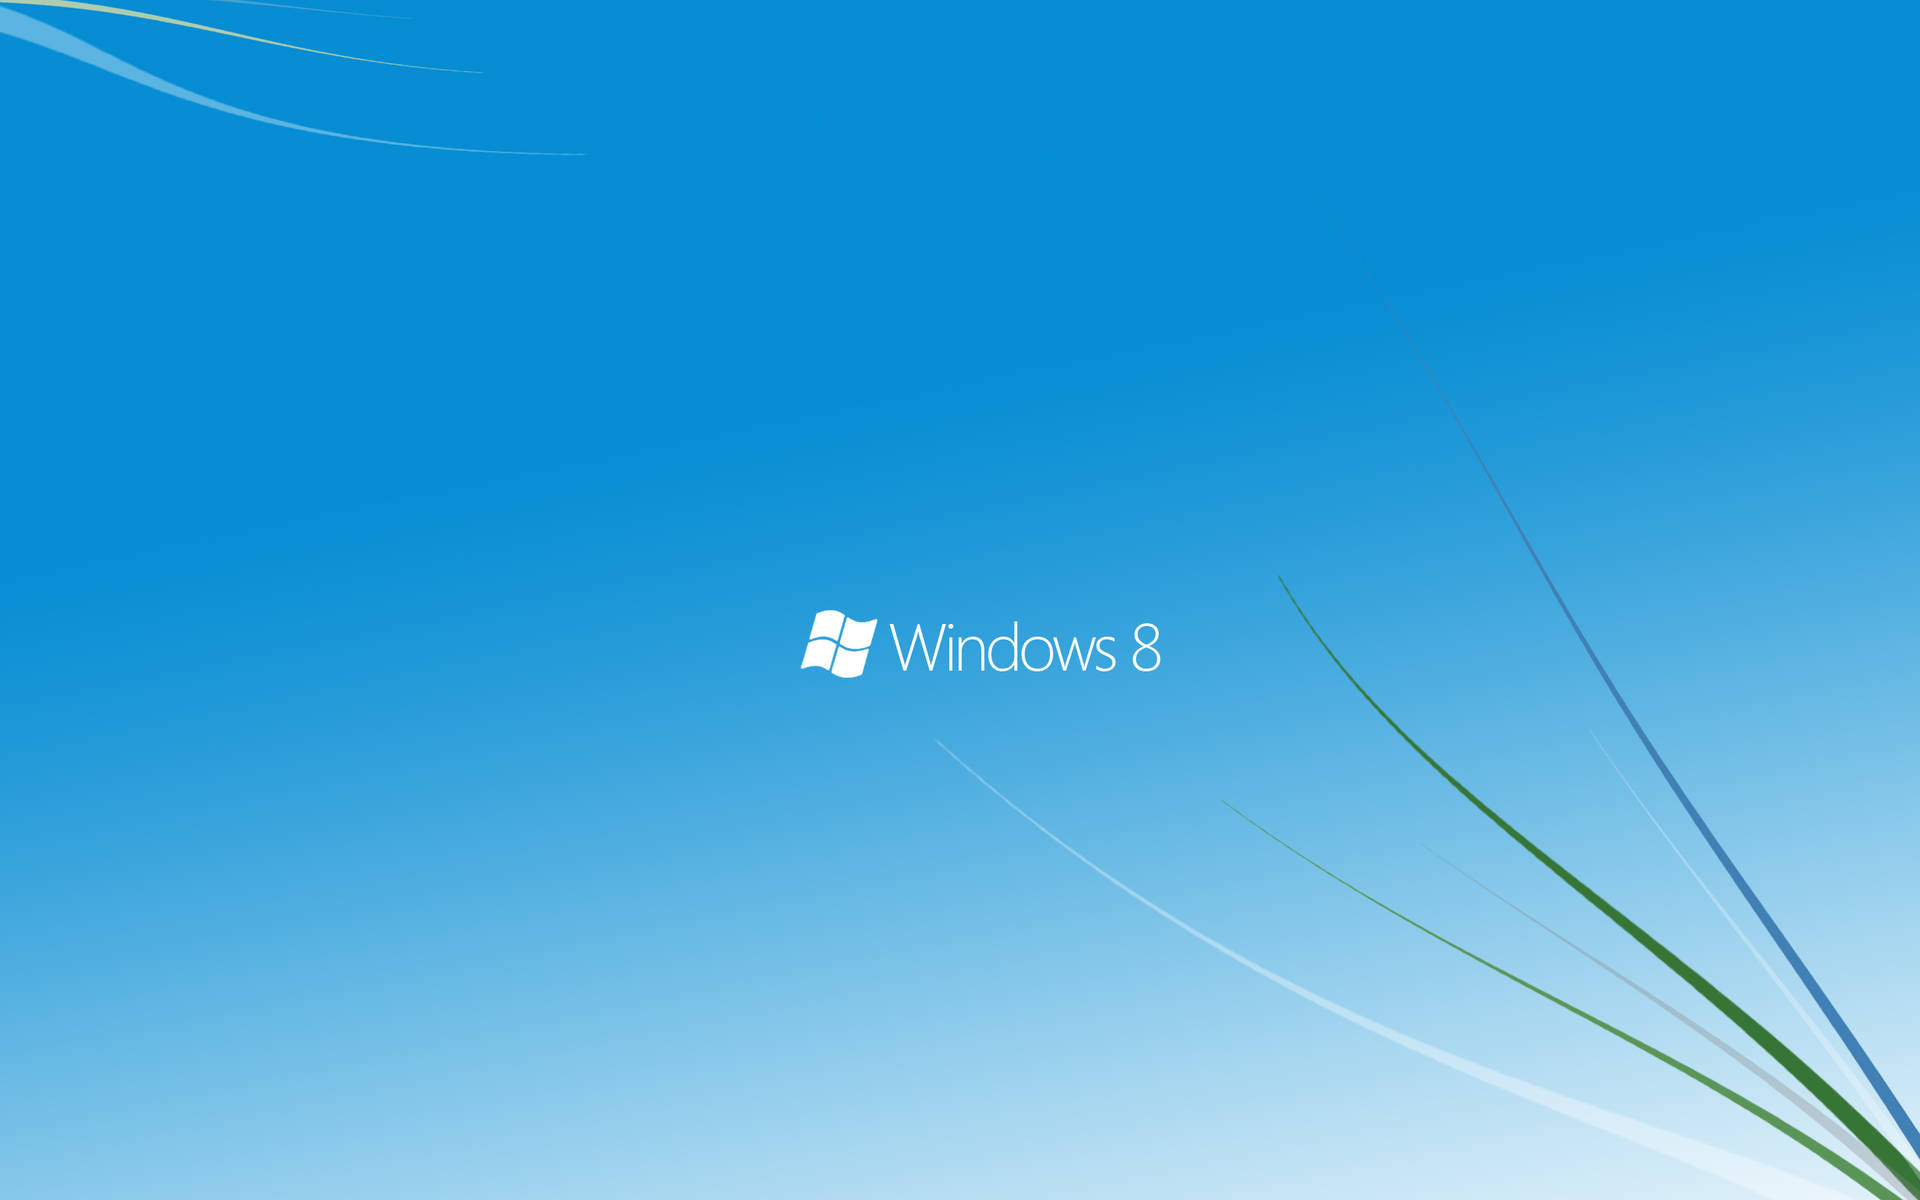 Free Windows 8 Wallpaper Downloads, [100+] Windows 8 Wallpapers for FREE |  